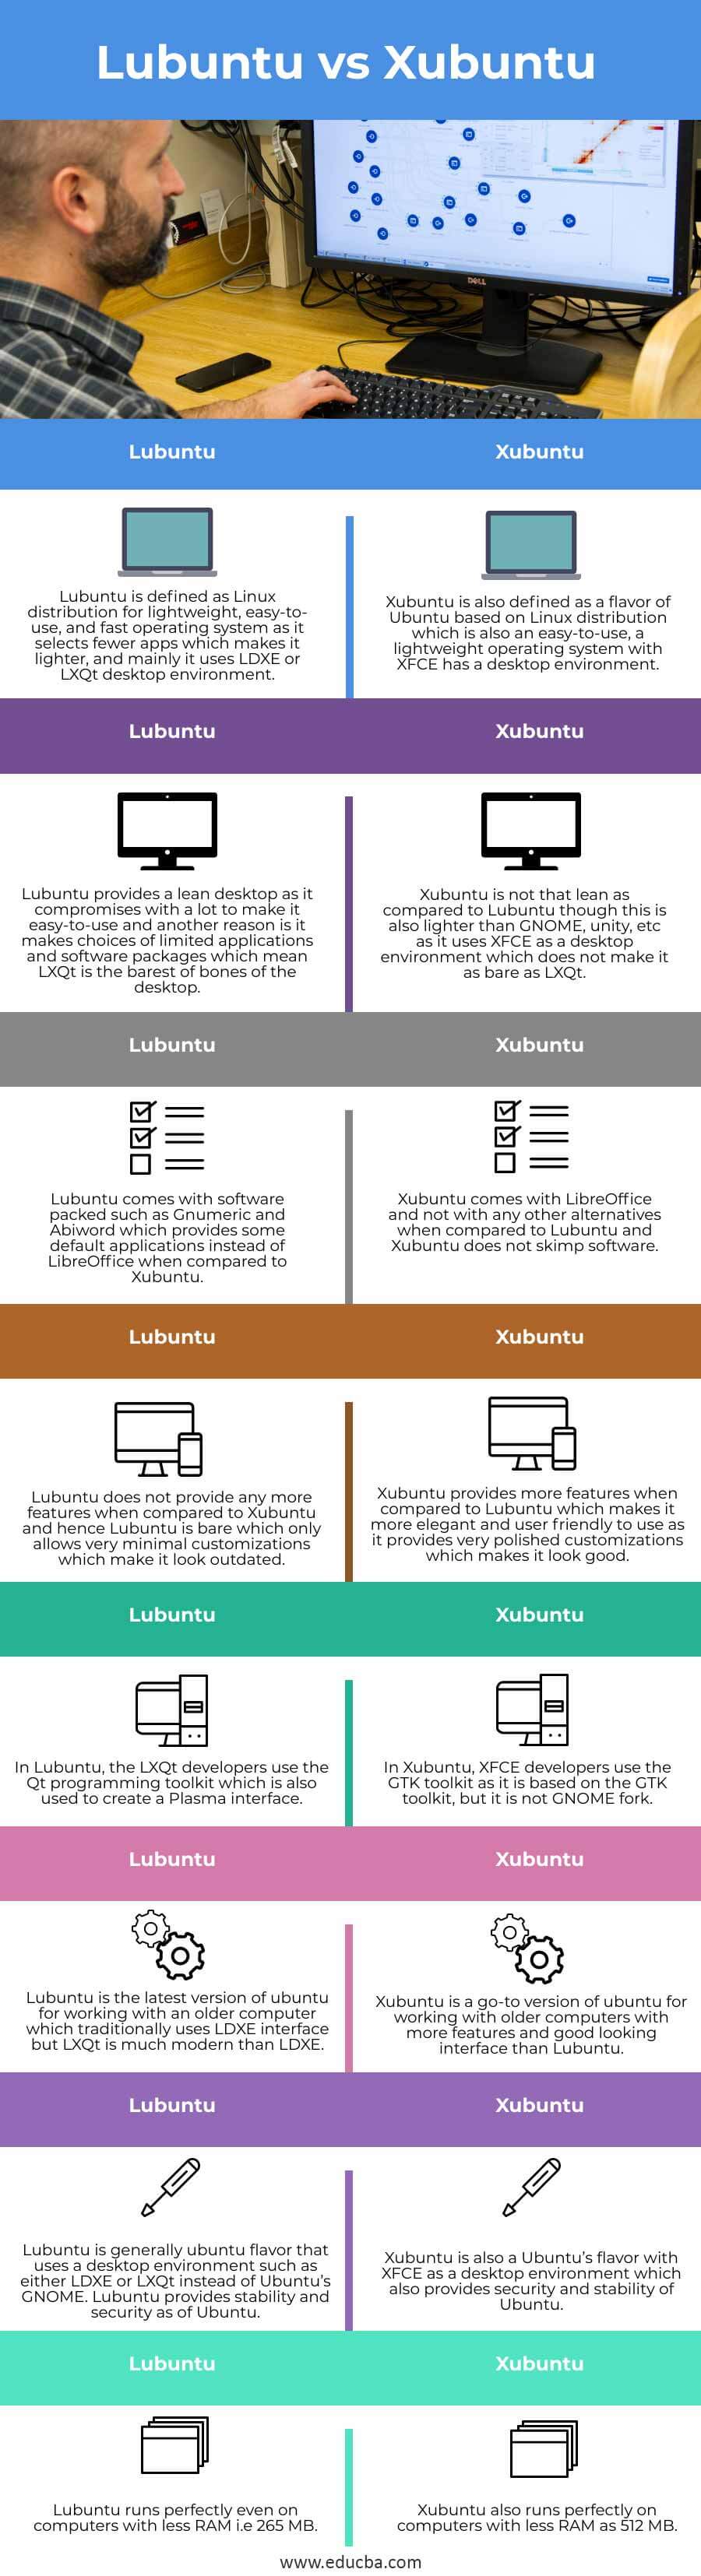 Lubuntu-vs-Xubuntu-info